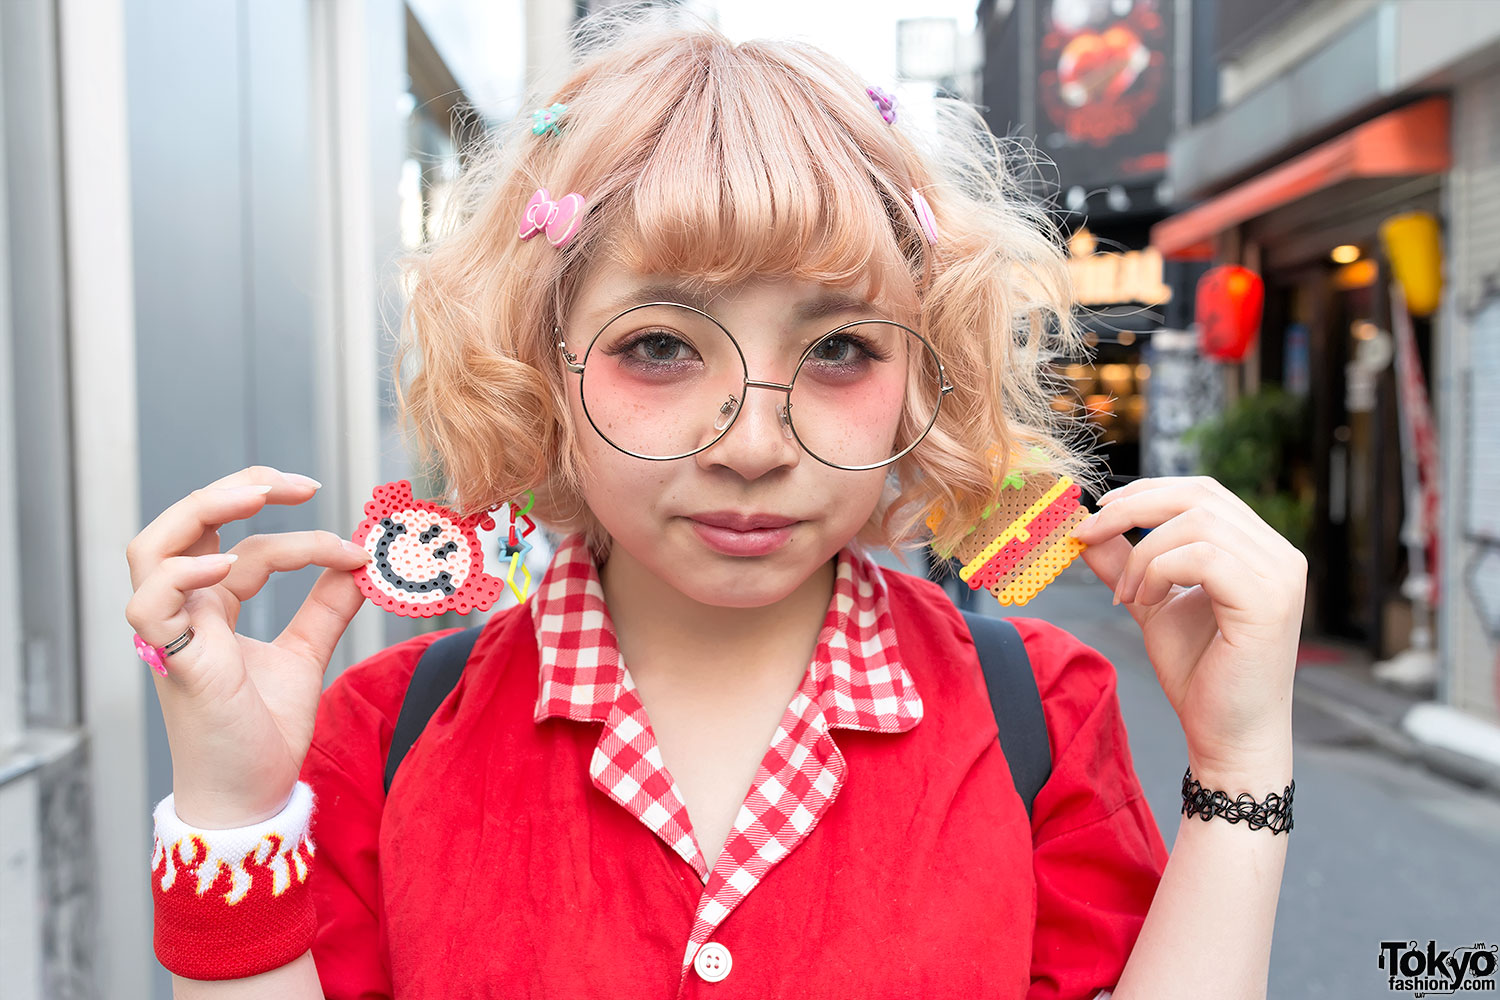 https://tokyofashion.com/wp-content/uploads/2014/06/Hello-Kitty-Astro-Boy-Harajuku-2014-05-11-DSC5847.jpg